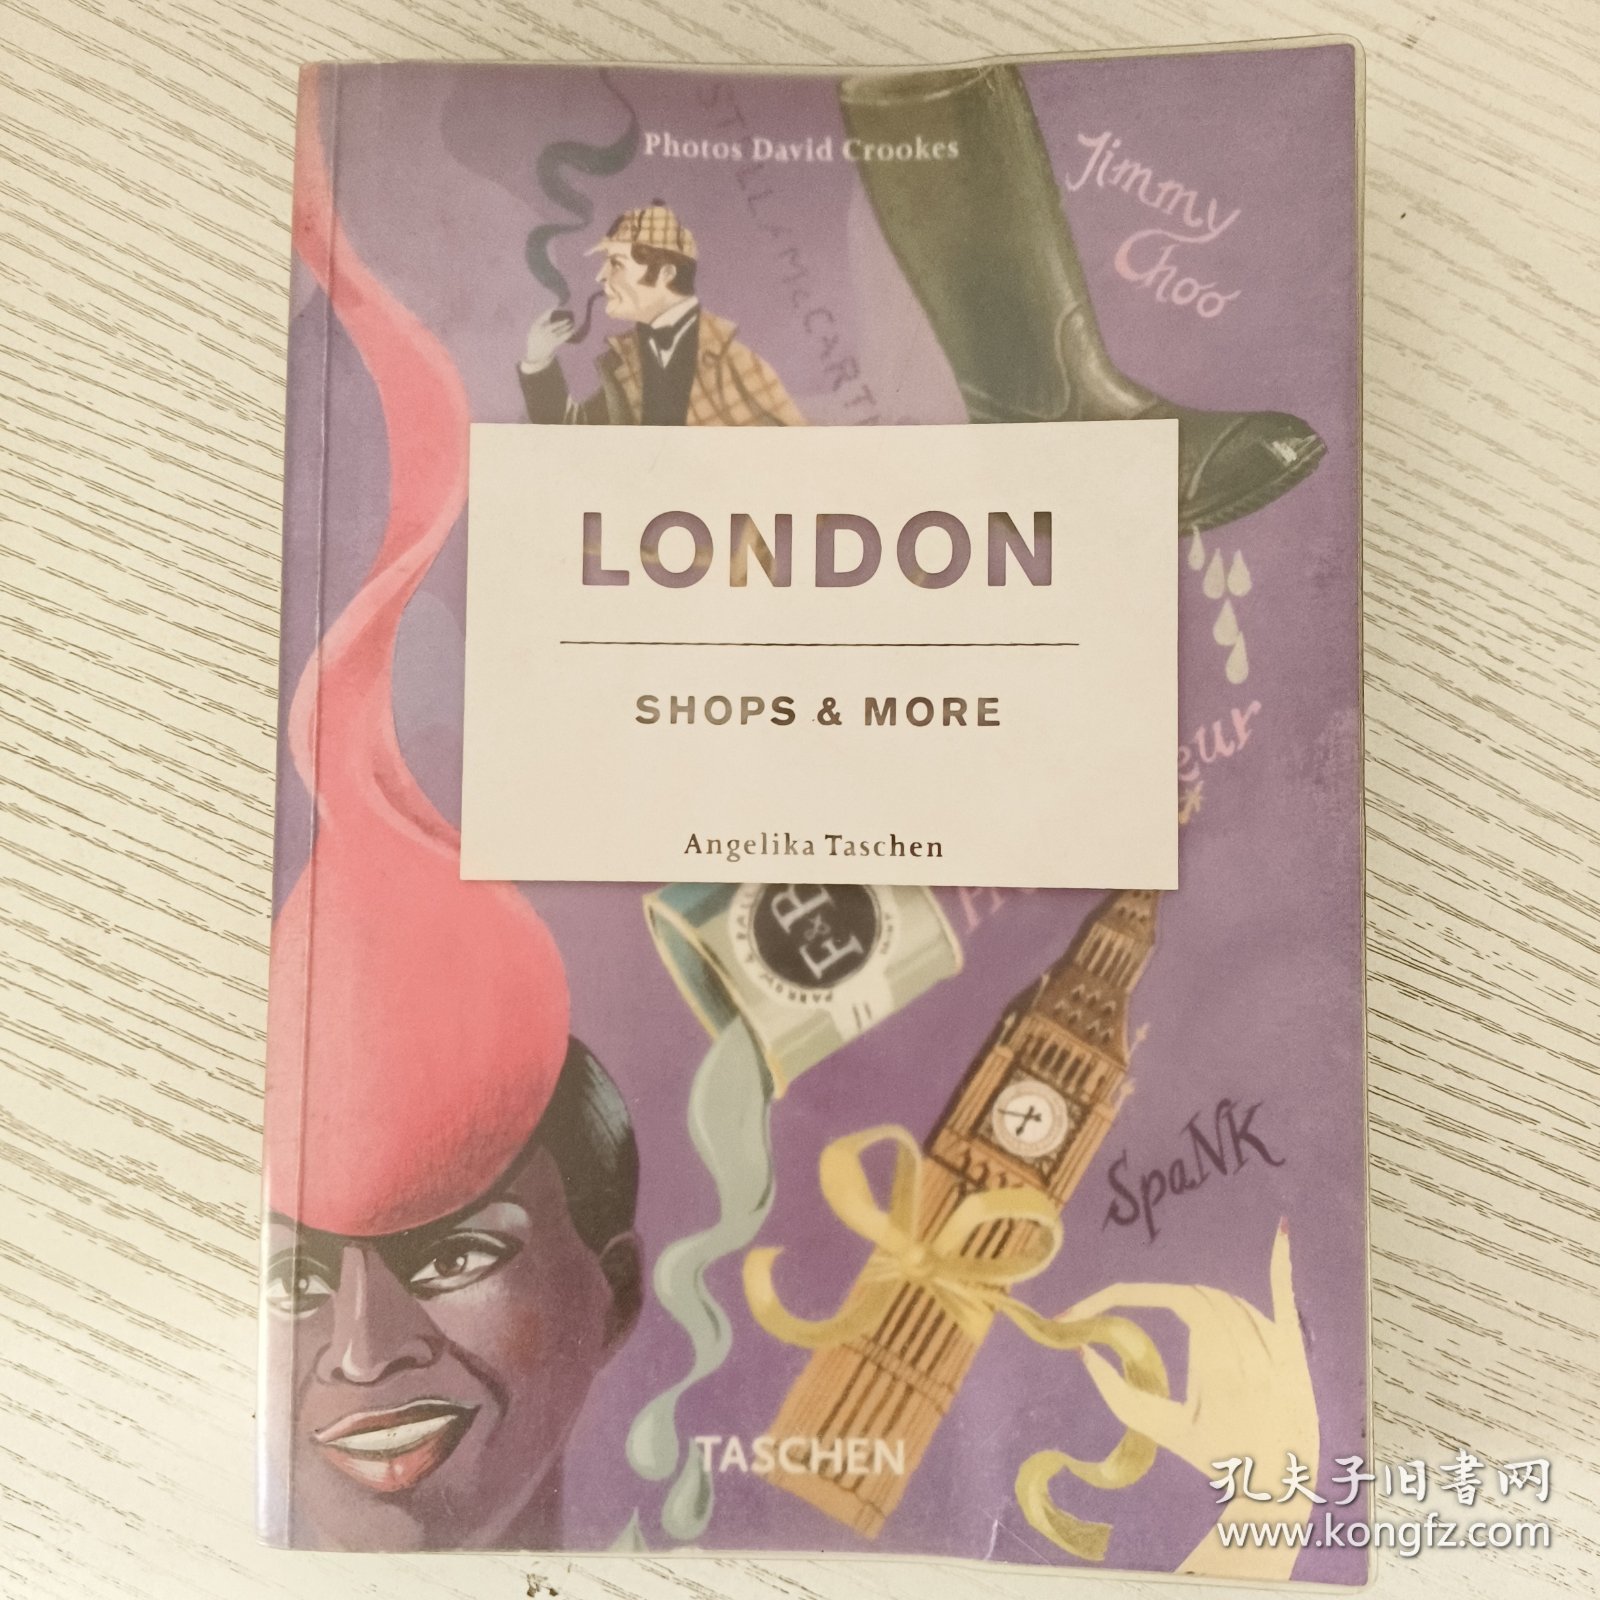 London, Shops & More